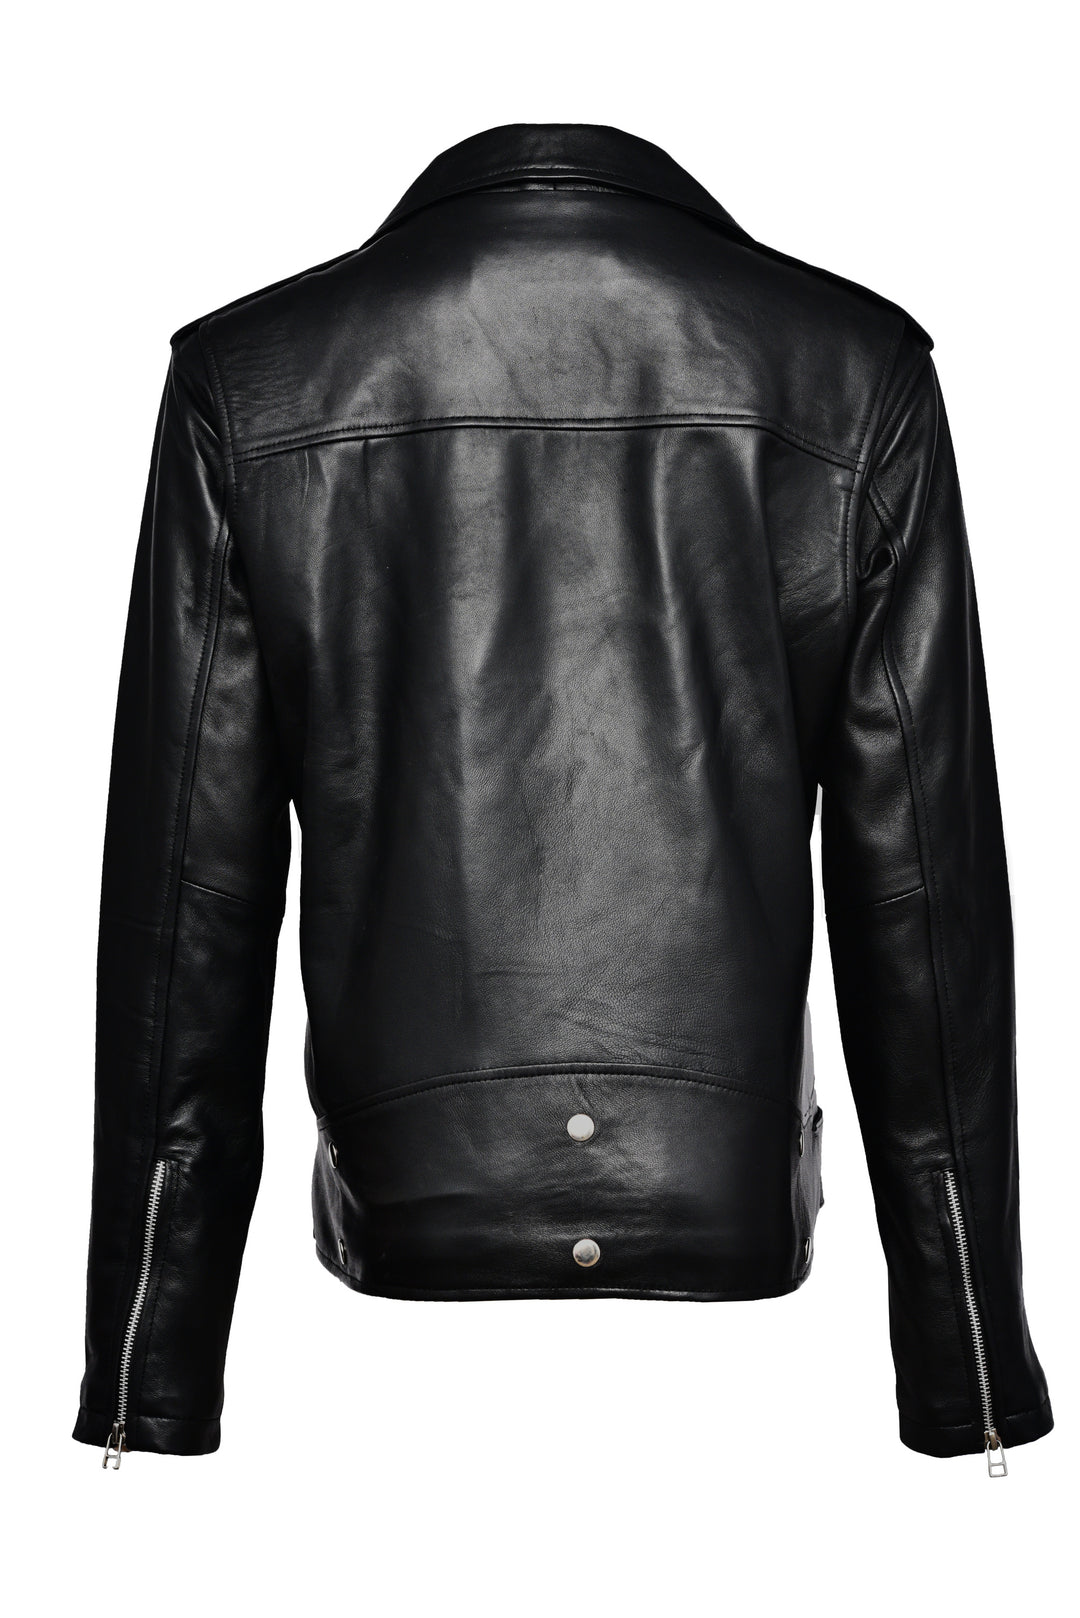 Premium Black Leather Jacket Australia